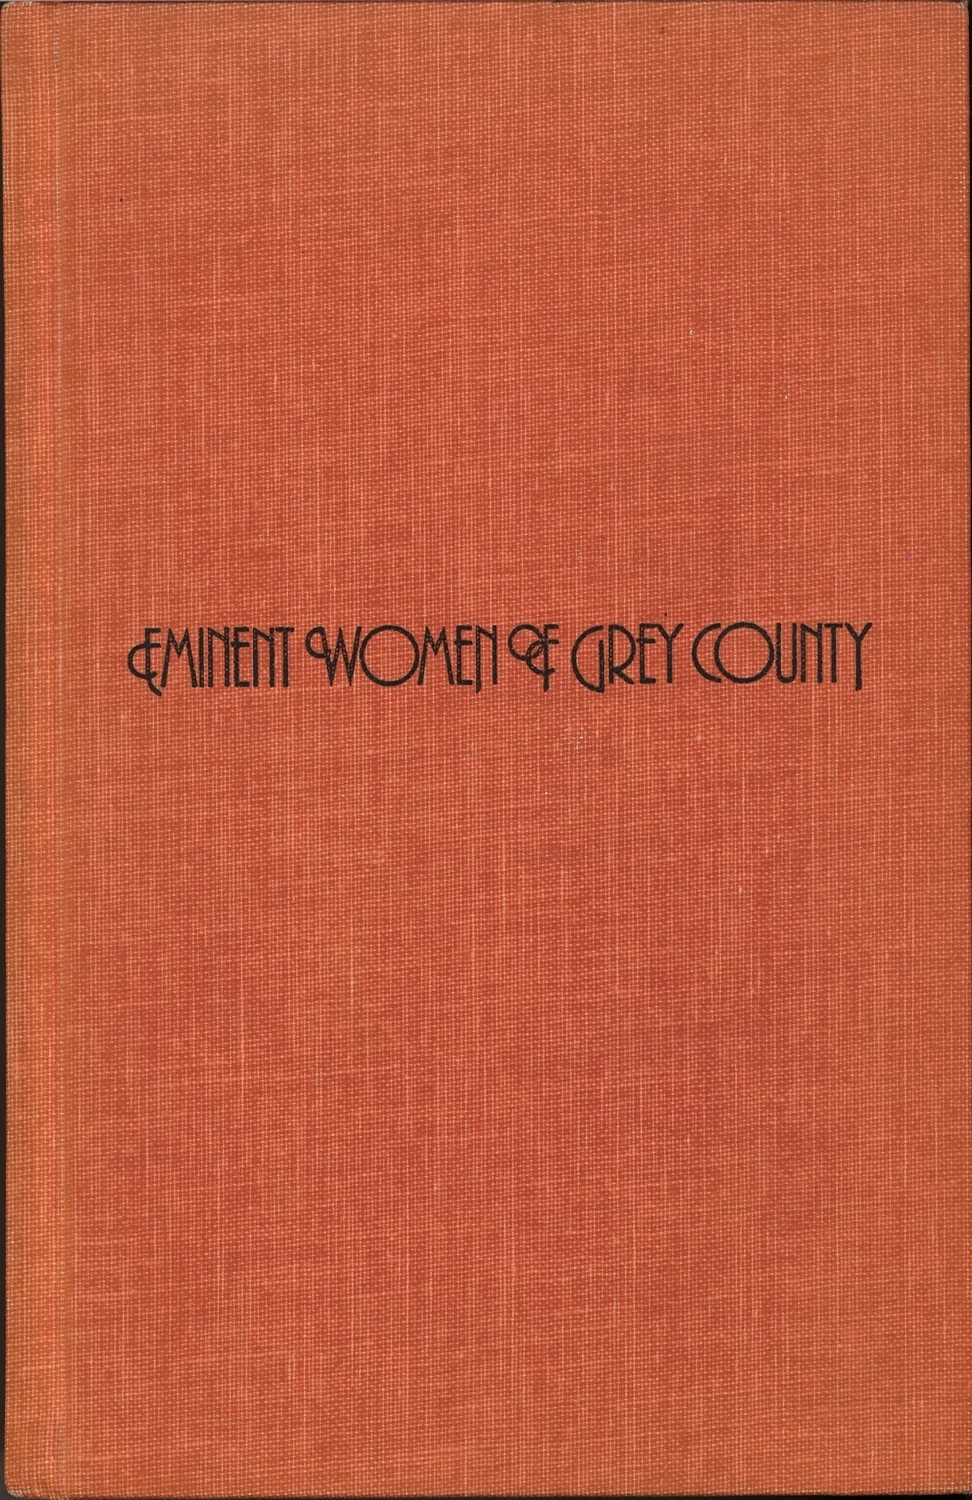 Eminent Women of Grey County ed. Sharon Cake